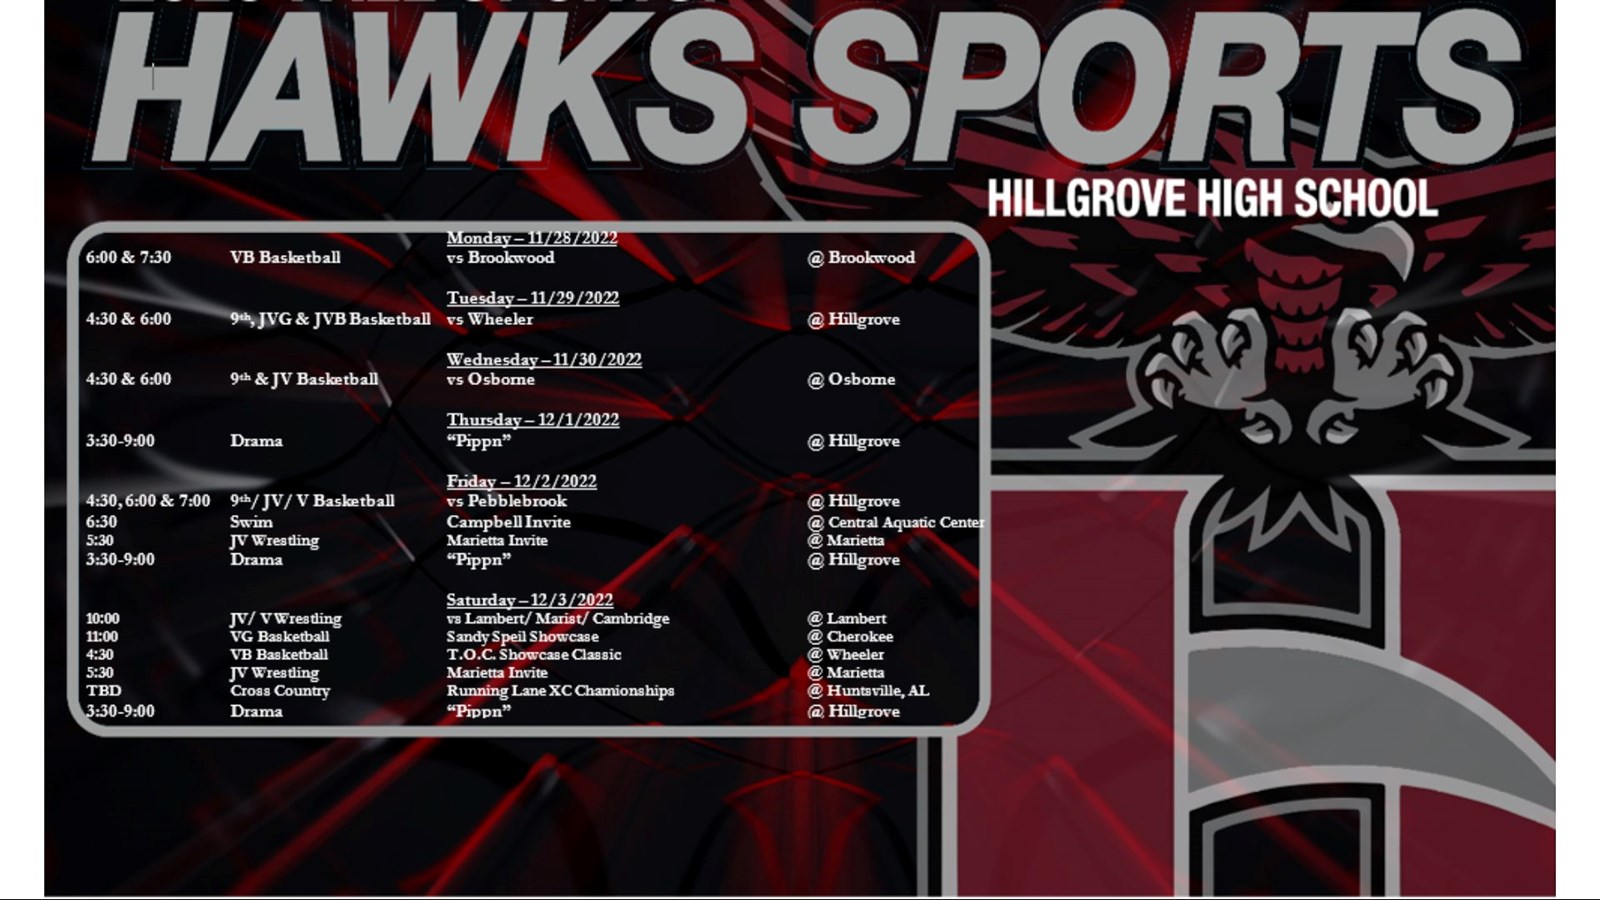 Hawks Sports for week of November 28, 2022